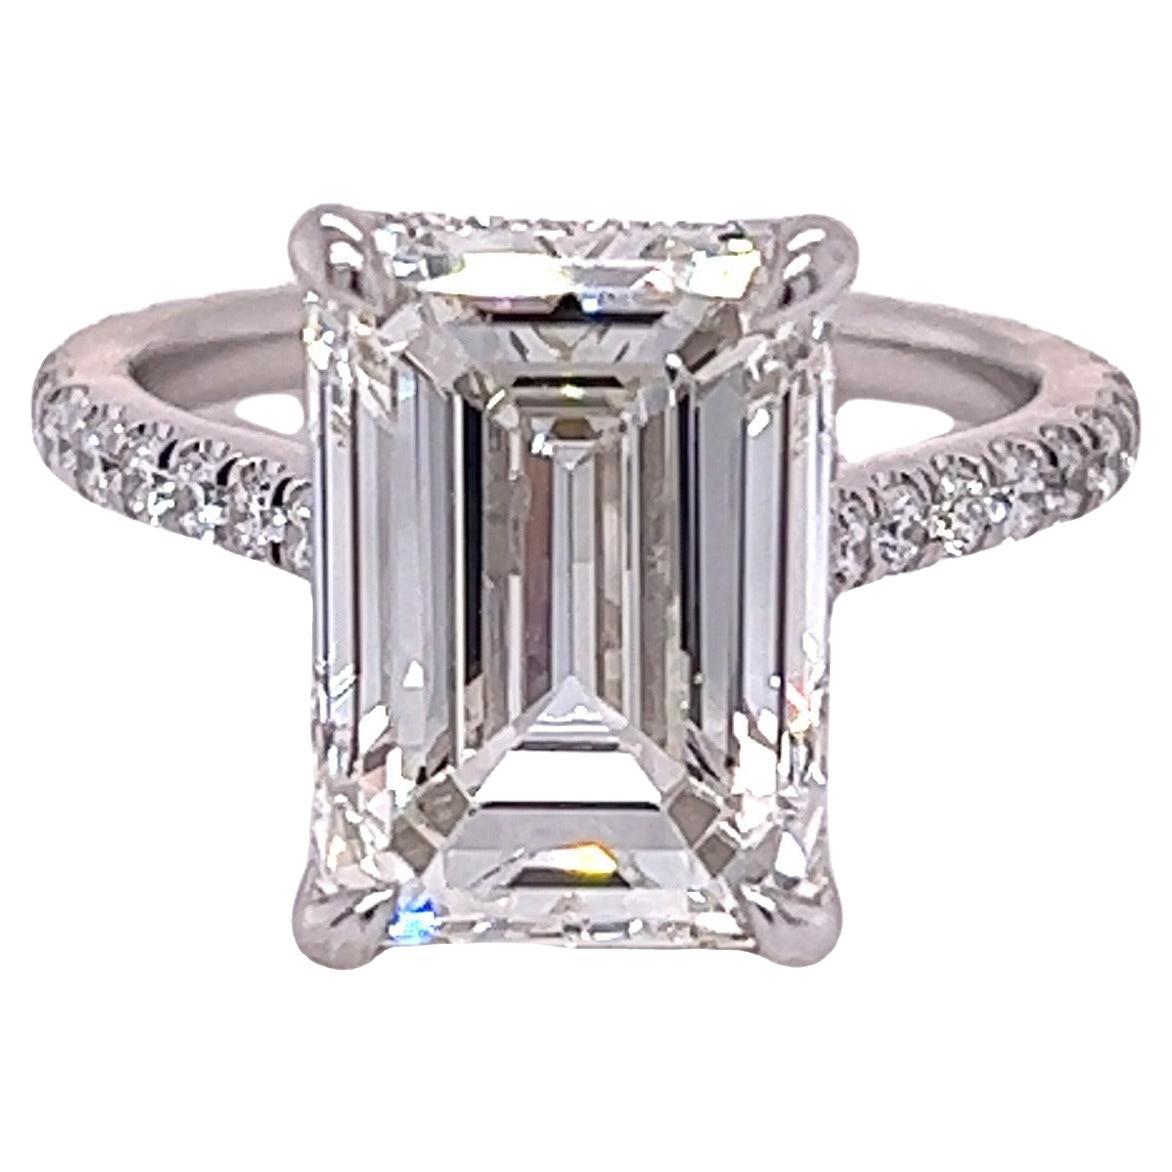 David Rosenberg 6.02 Carat Emerald Cut I VS1 GIA Diamond Engagement Ring